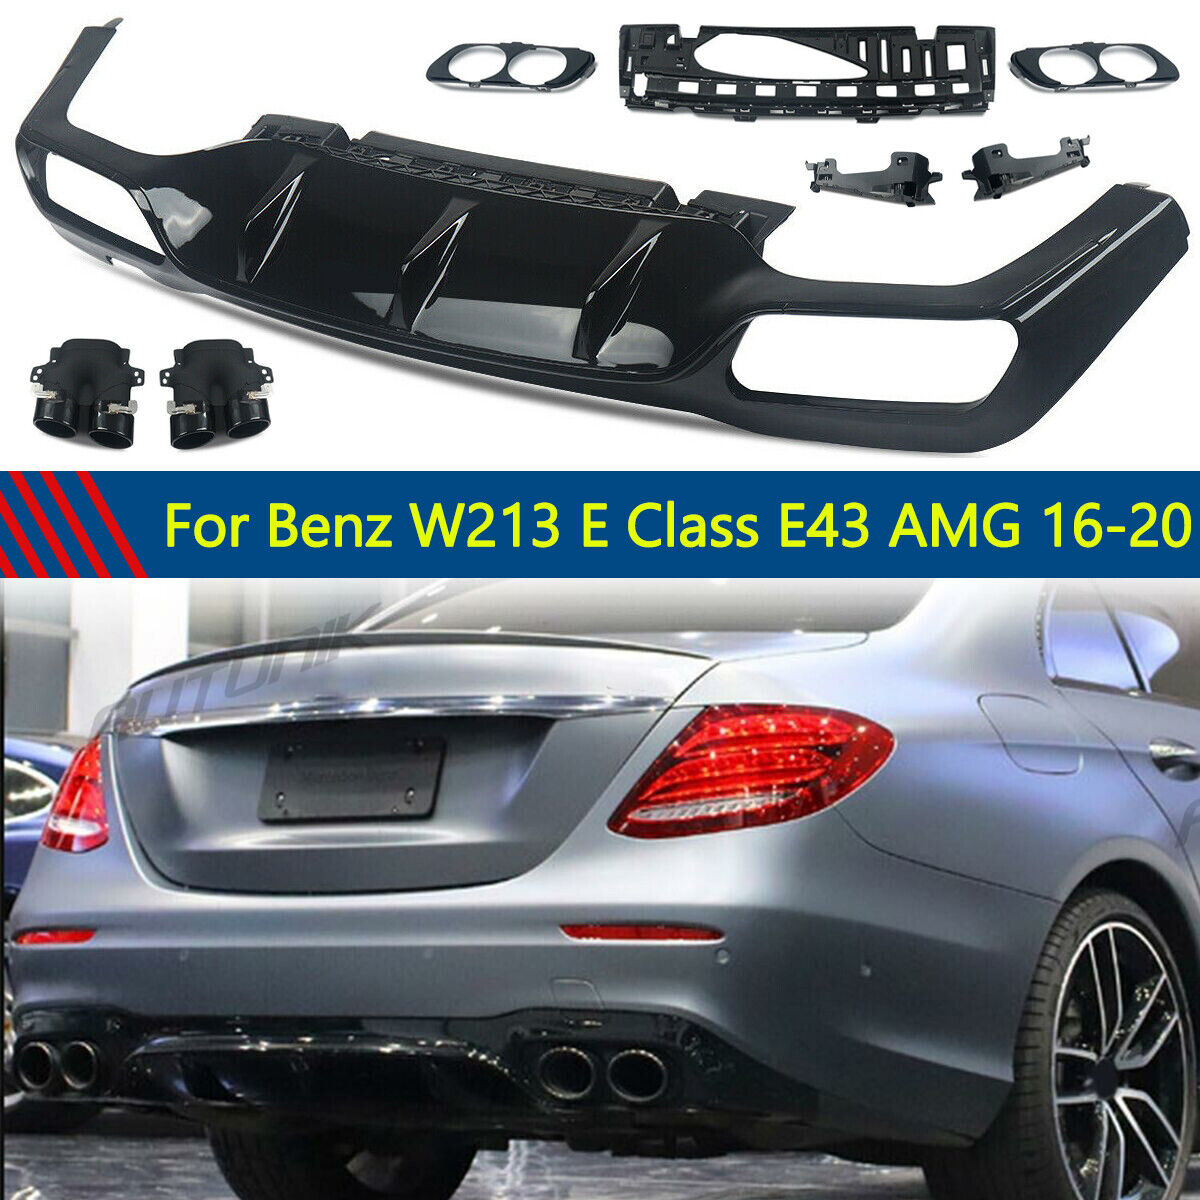 Rear Diffuser W/ Exhaust Tip Fit For  Benz W213 E300 E43/E53 AMG 2016-2020